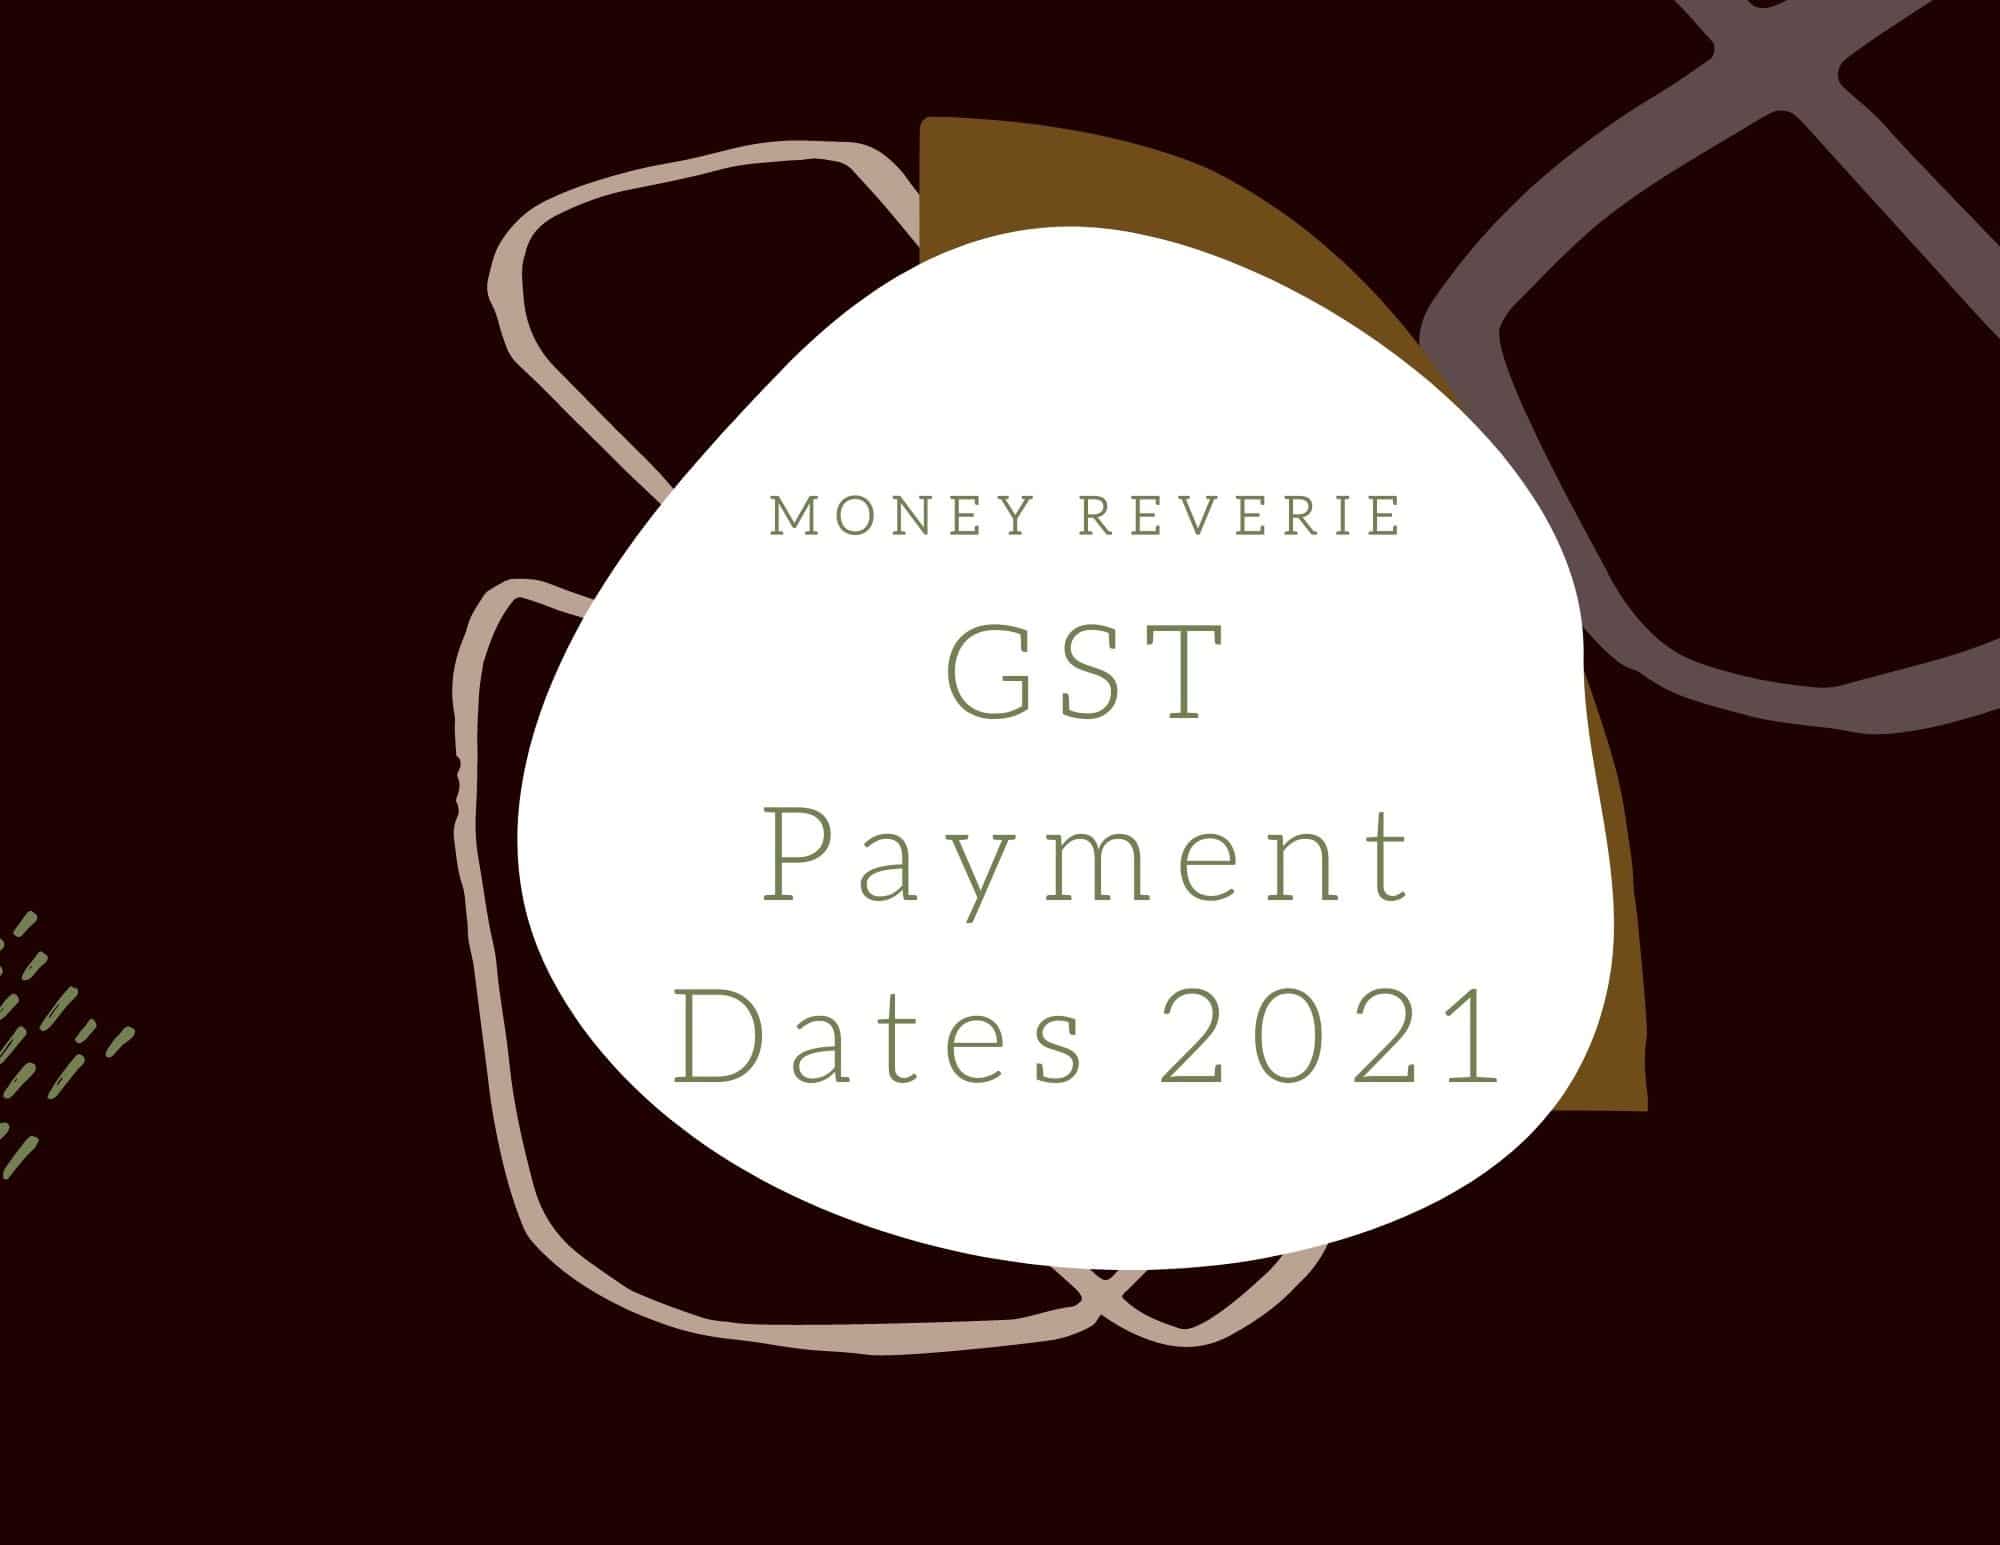 GST Payment Dates 2021